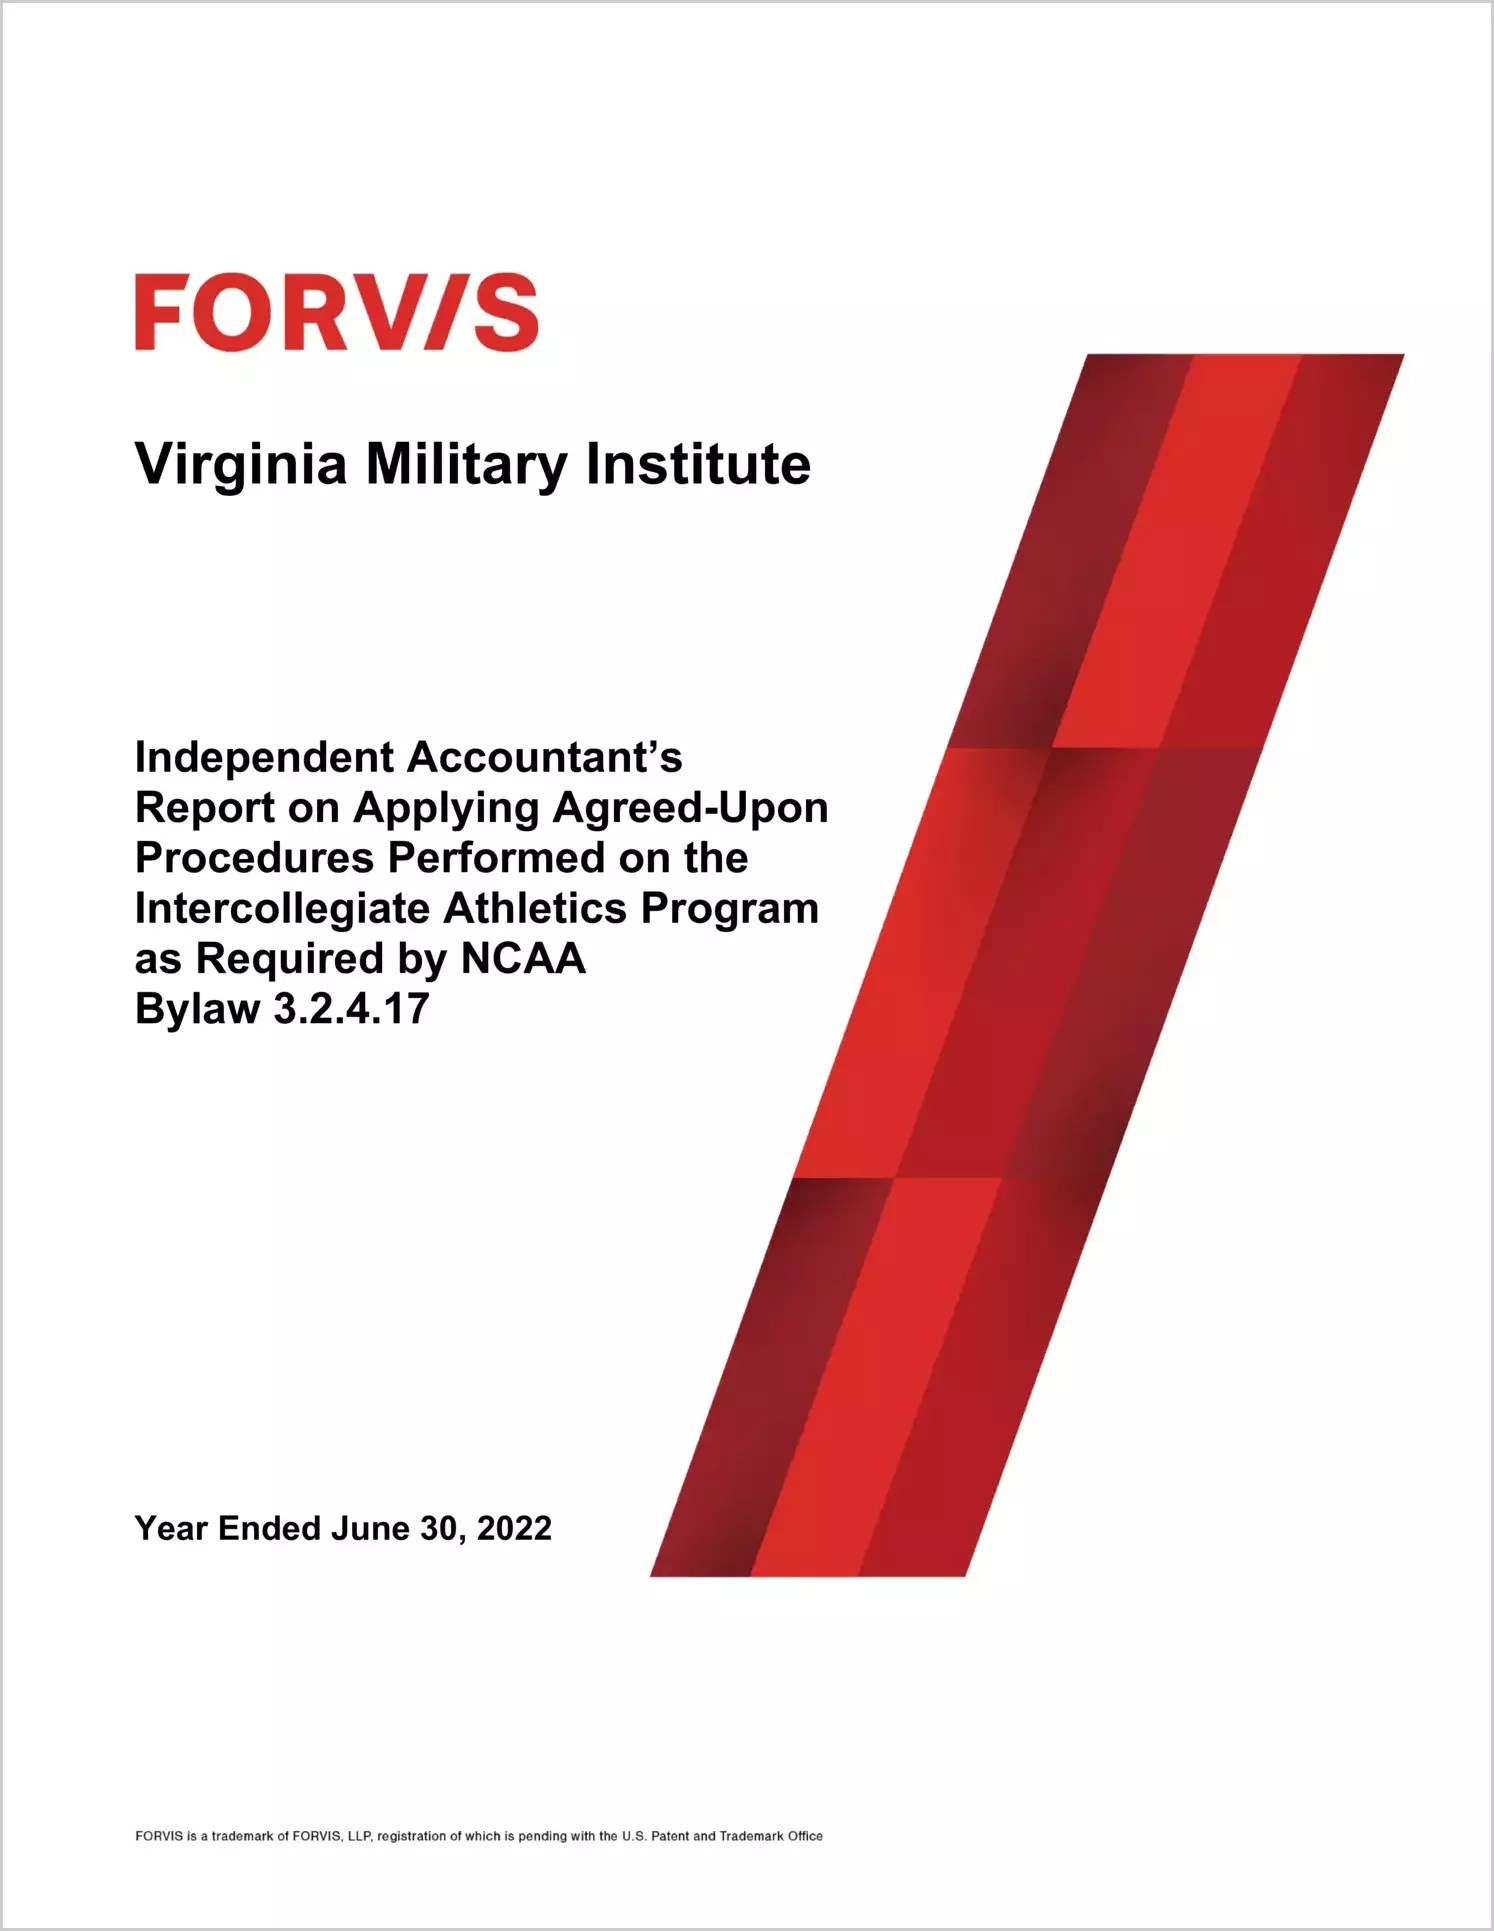 Virginia Military Institute Intercollegiate Athletics Programs for the year ended June 30, 2022